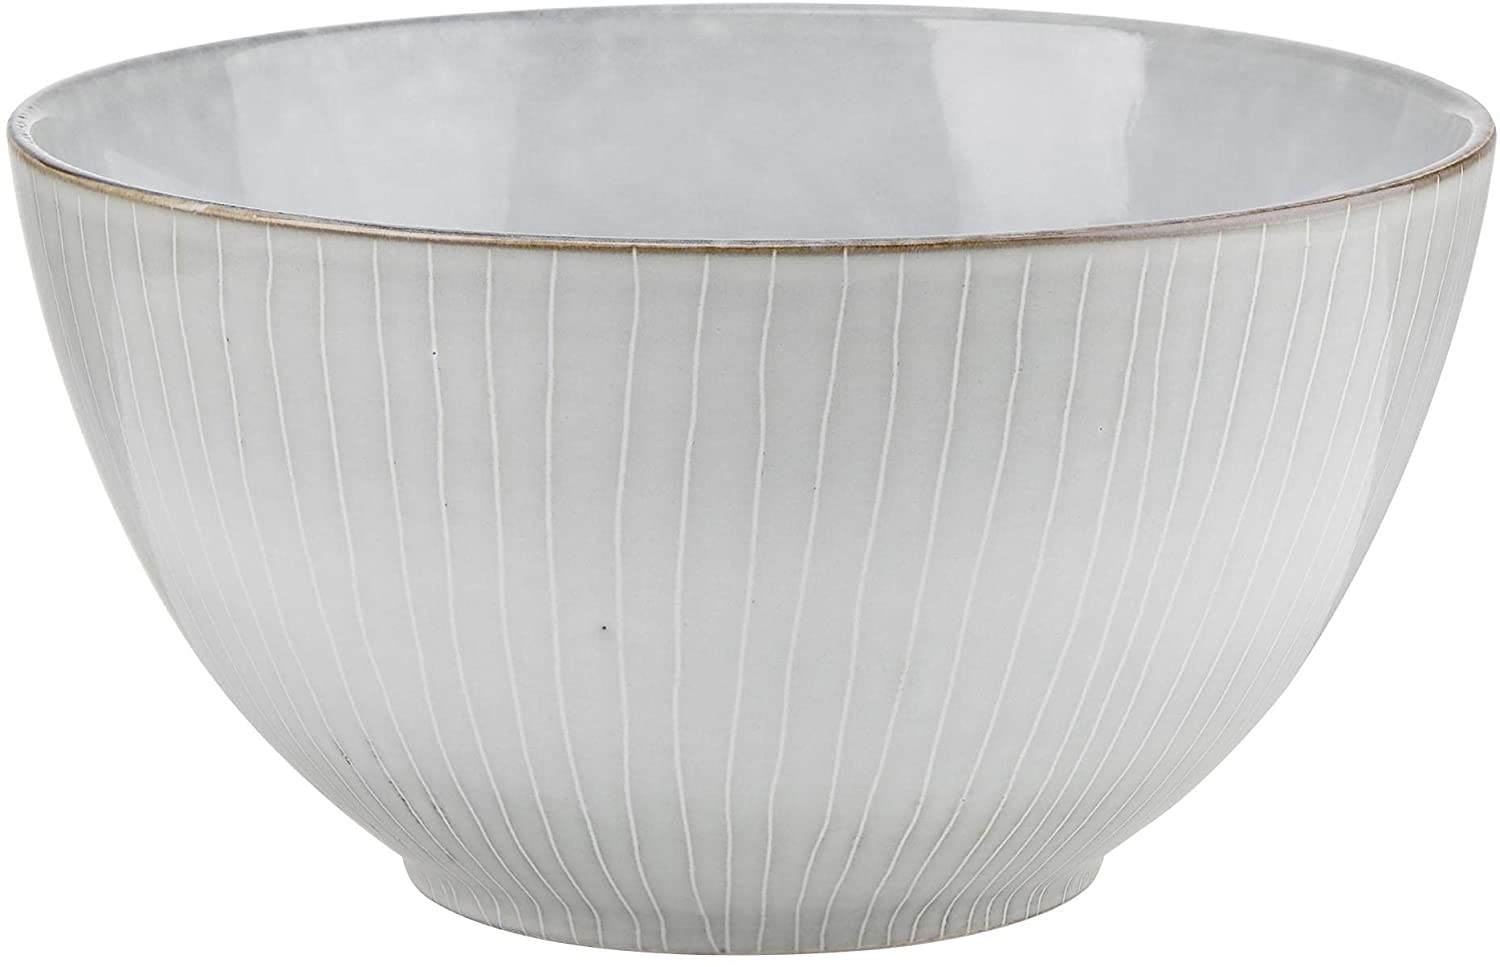 BUTLERS Henley bowl in grey, diameter 23 cm, bowl made of stoneware, salad bowl, cereal bowl, soup bowl, fruit bowl